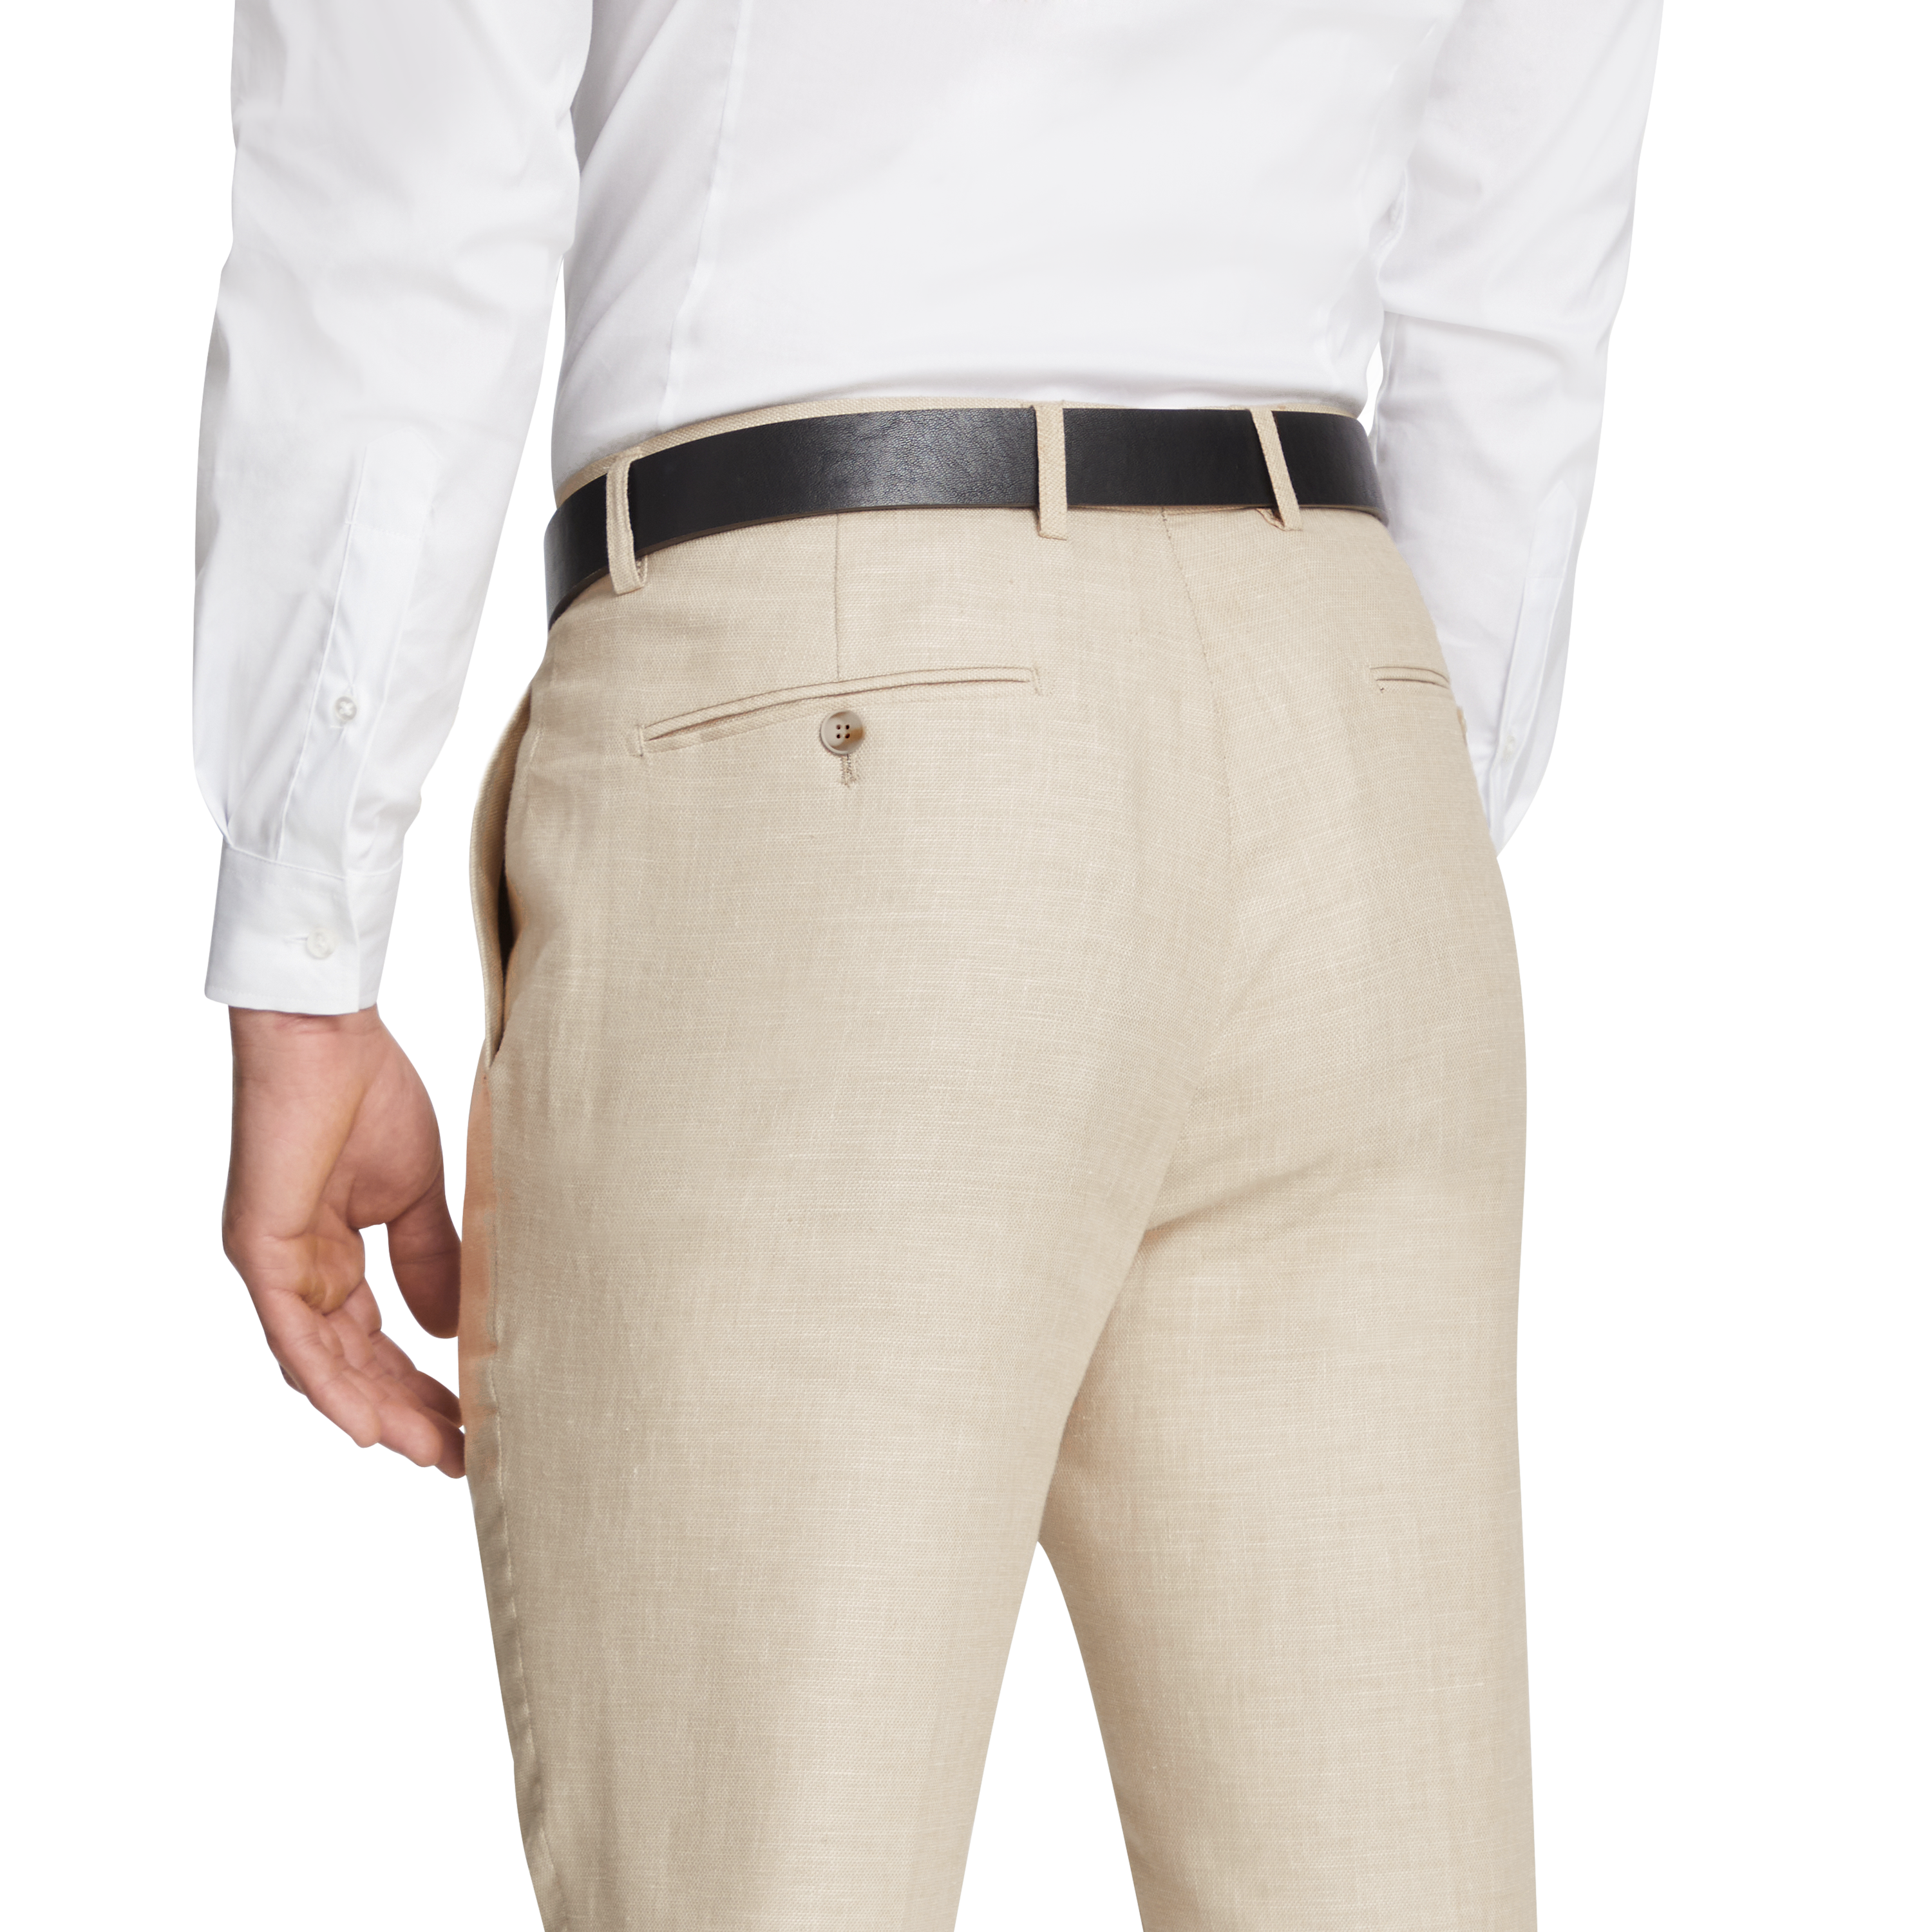 Men's Slim Fit Dress Pants & Slacks | Nordstrom Rack